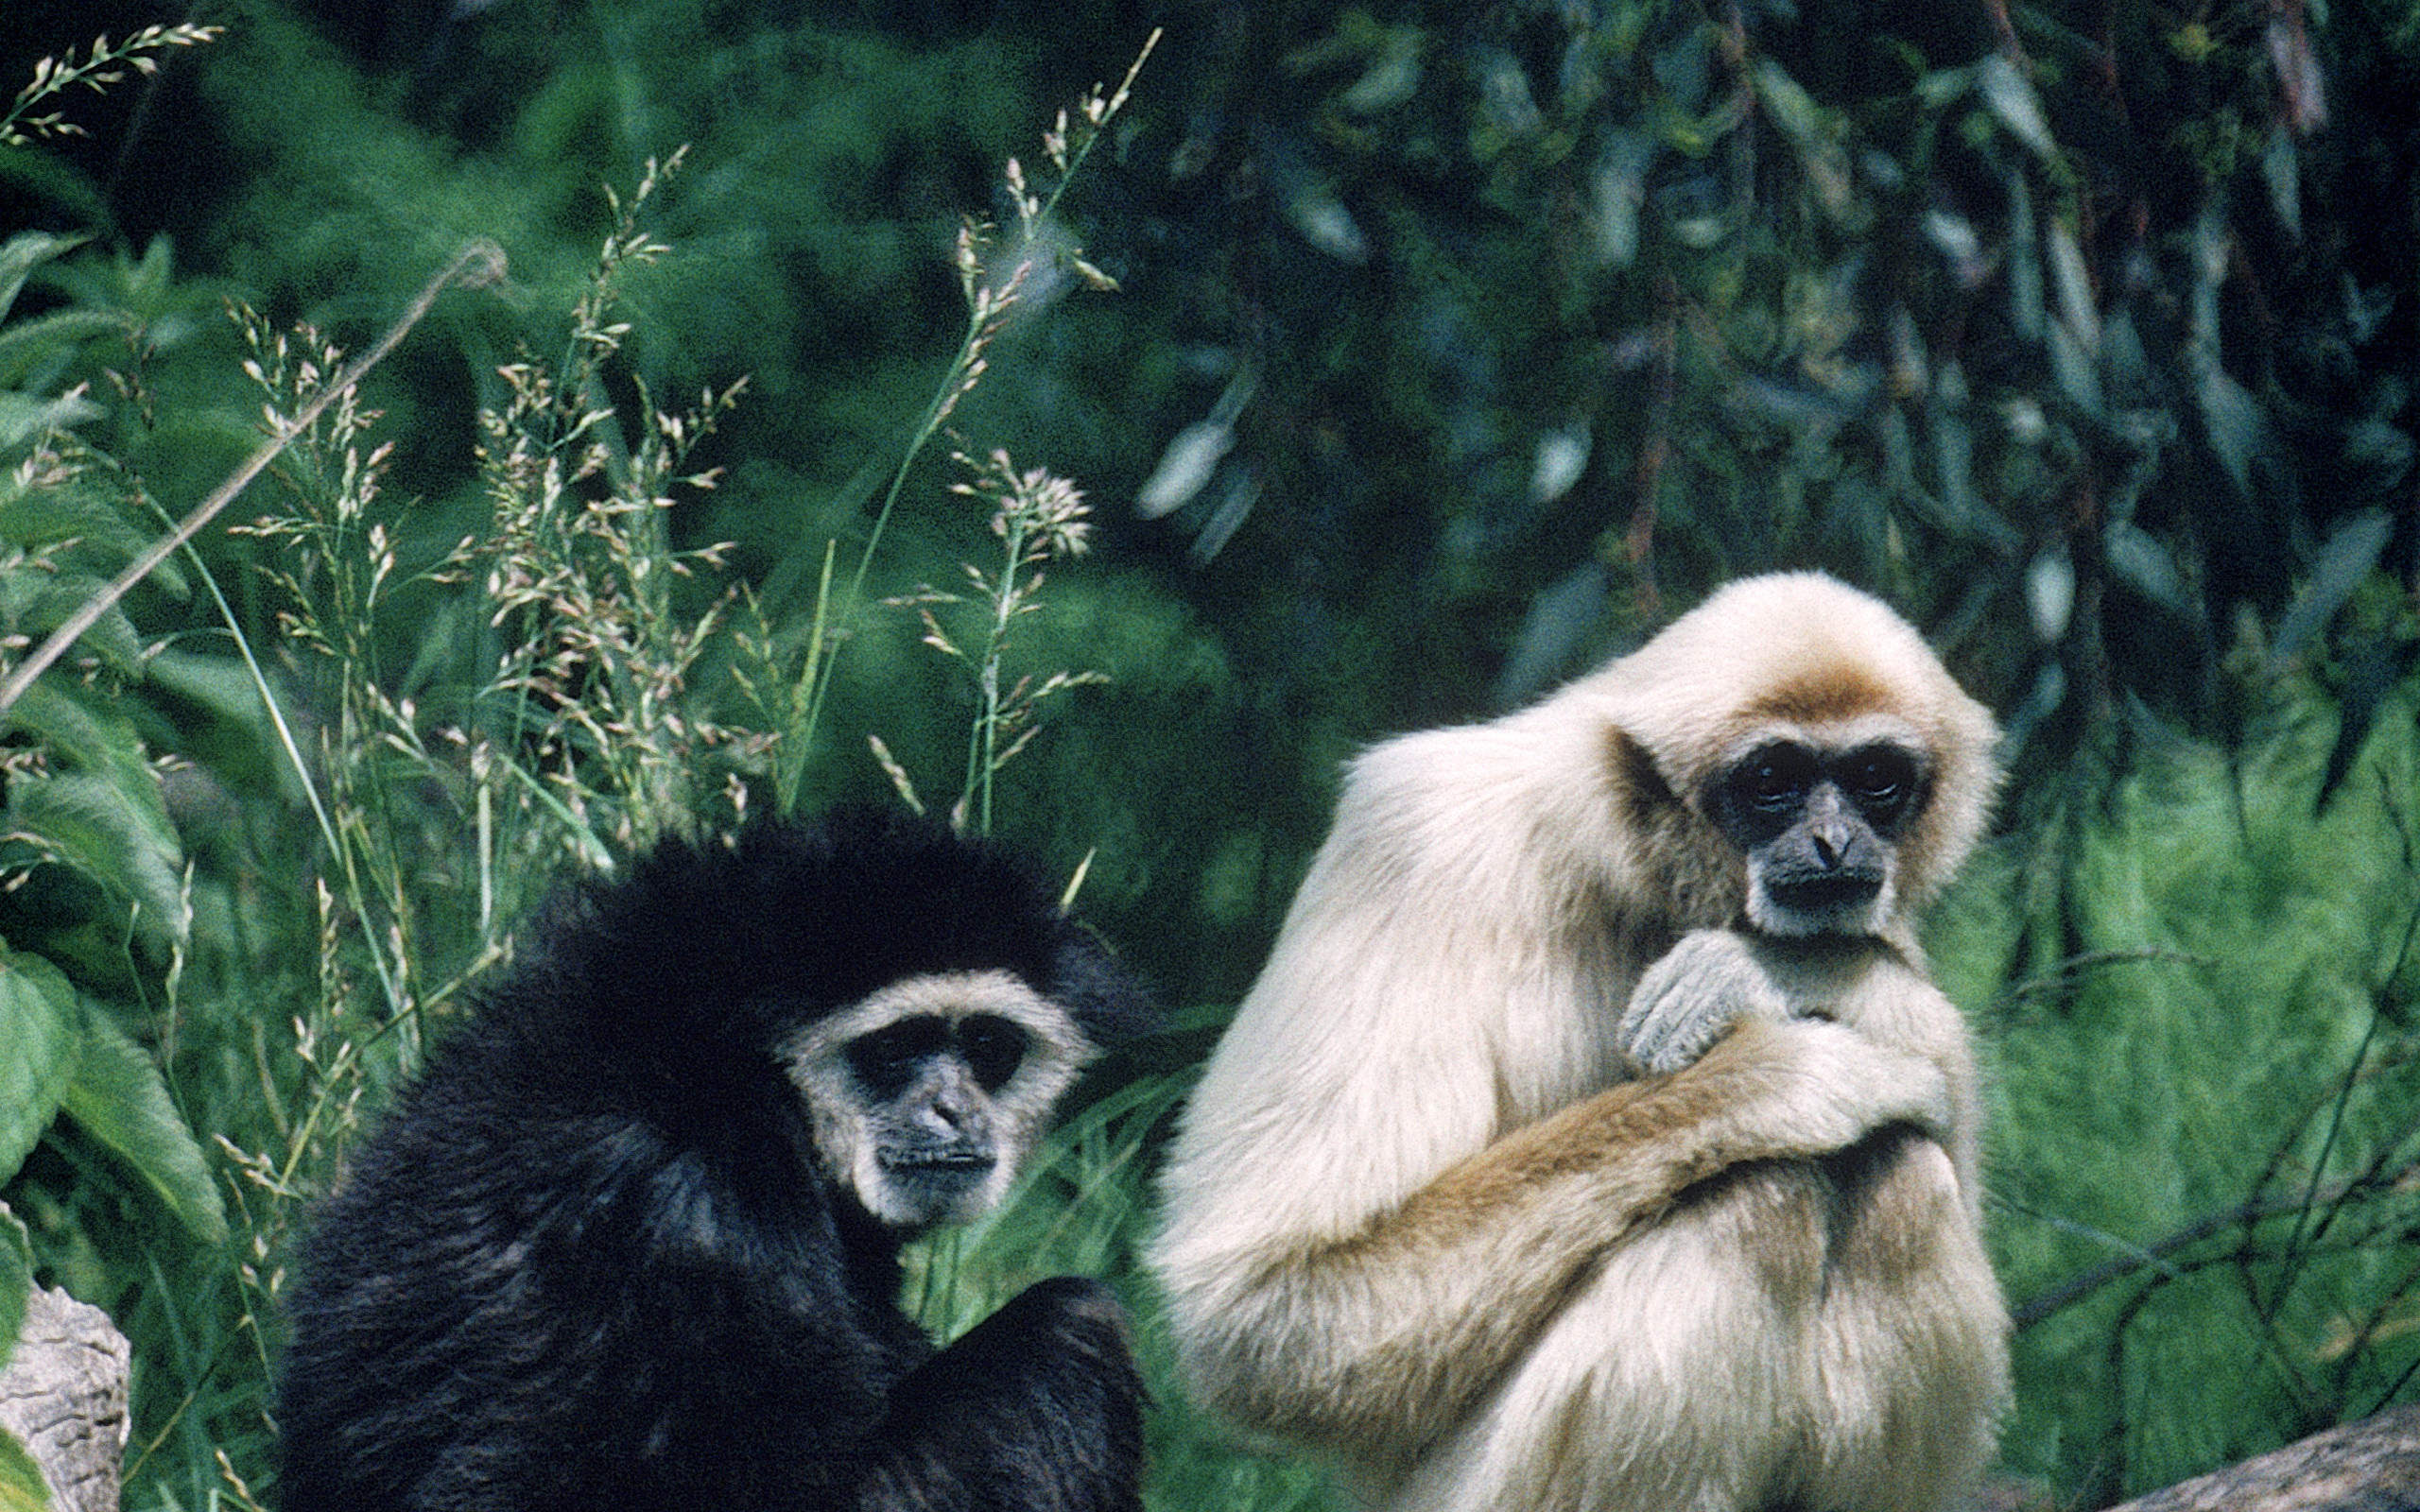 Gibbon Pictures  Download Free Images on Unsplash